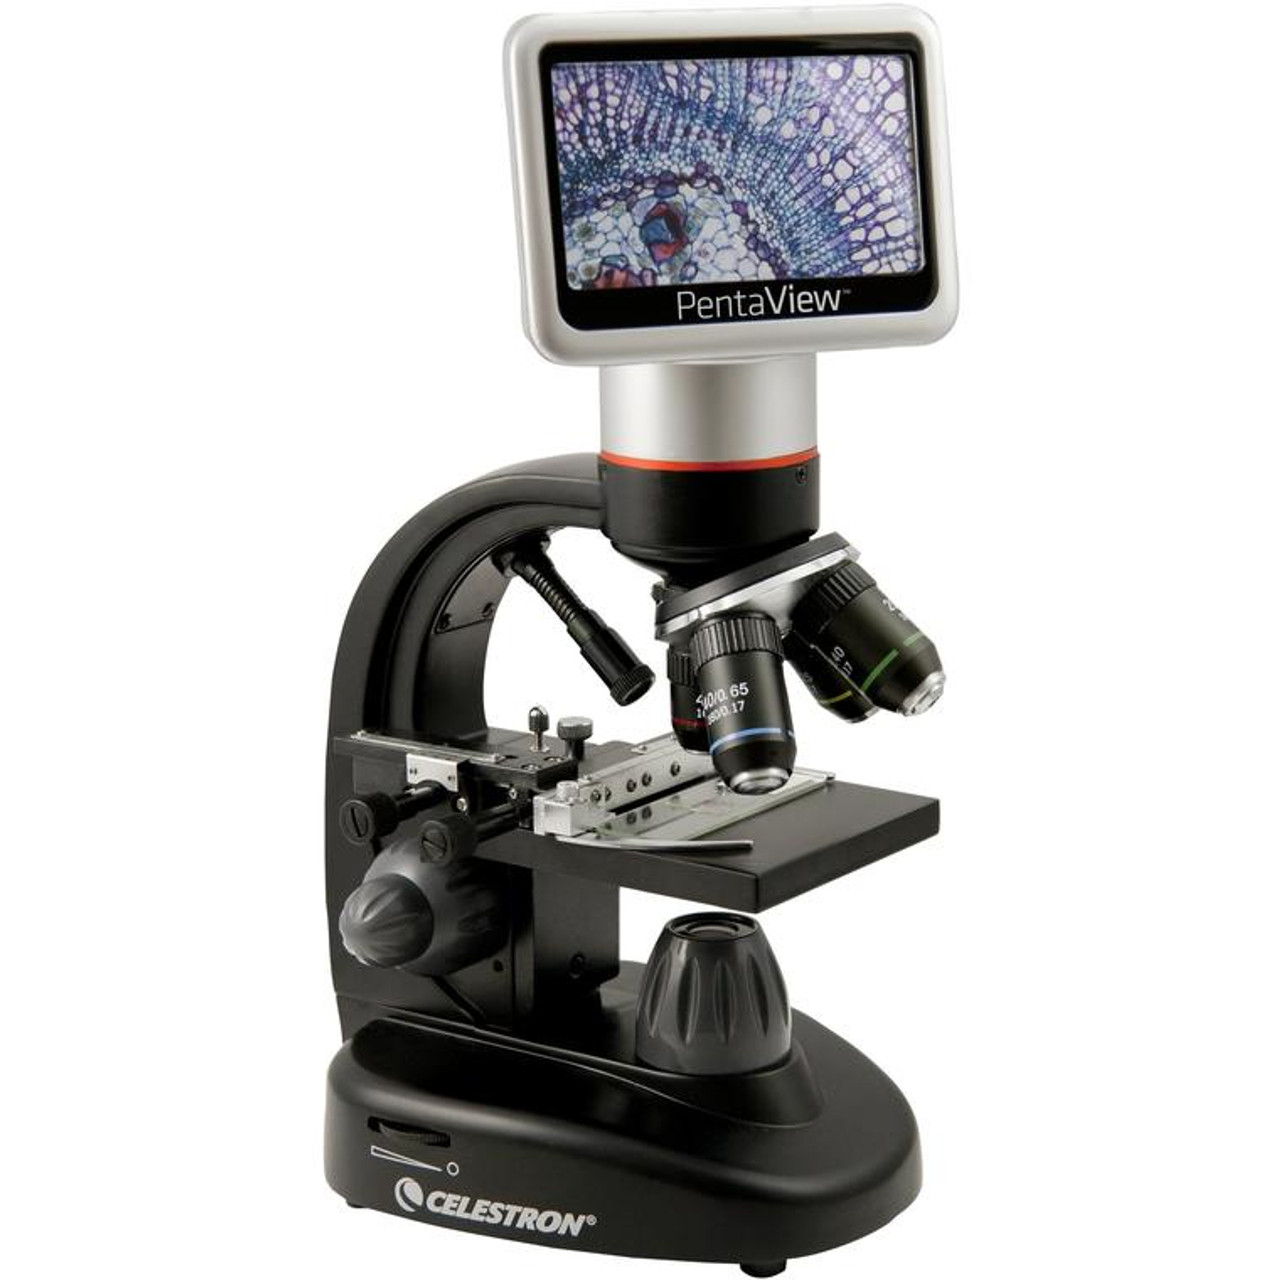 Celestron PentaView LCD Digital Microscope KW Telescope